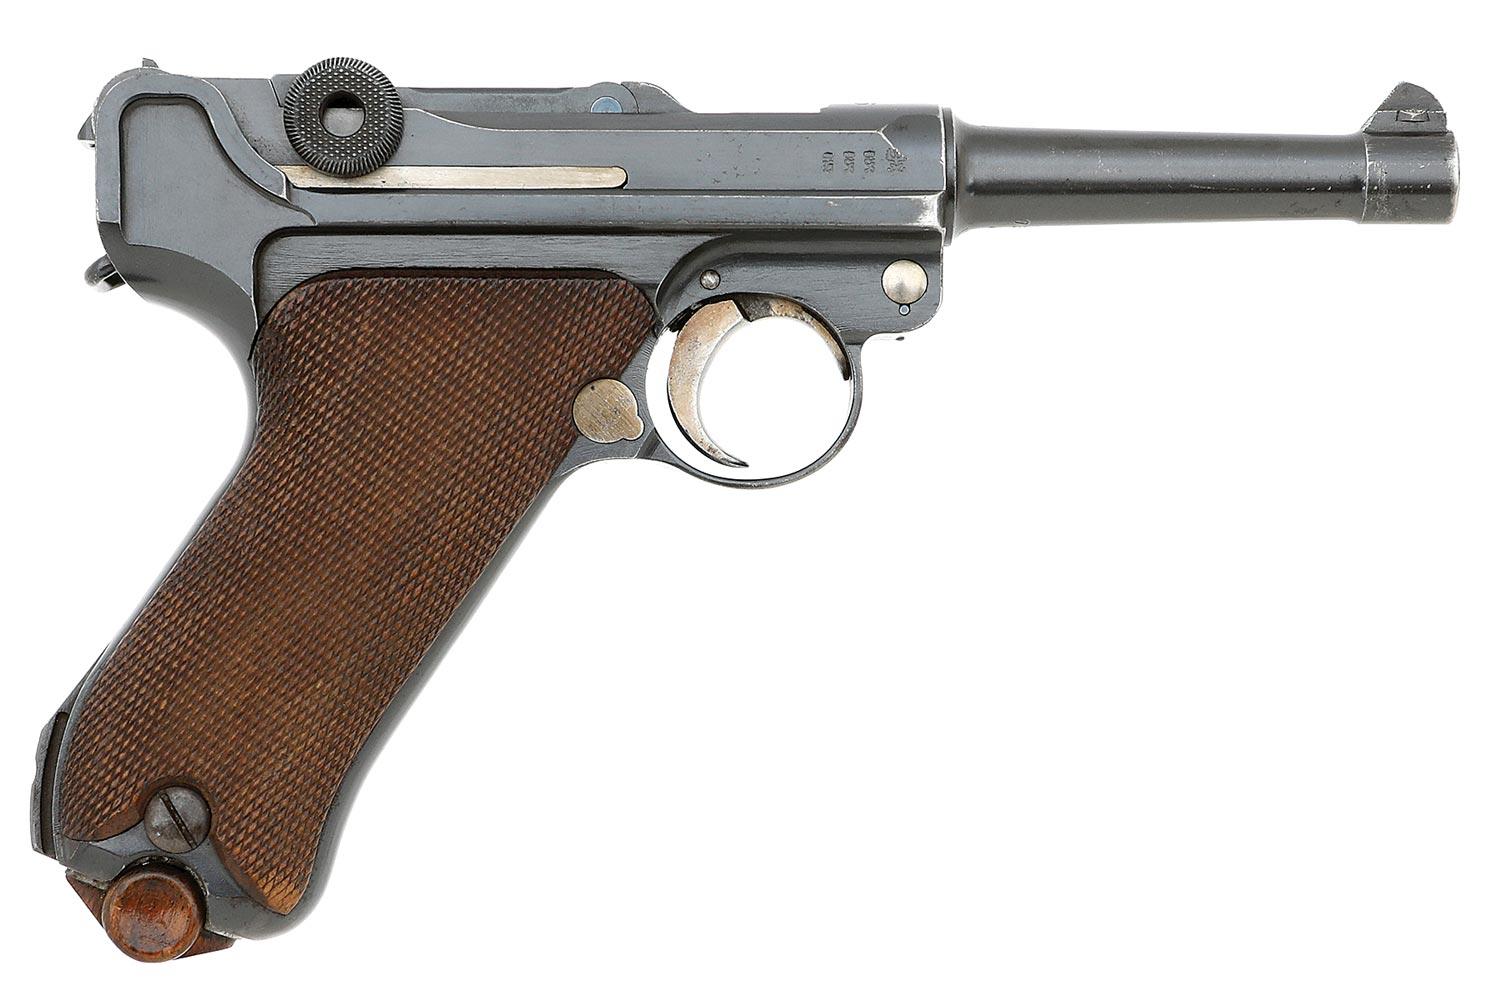 German P.08 Luger Police Pistol by DWM